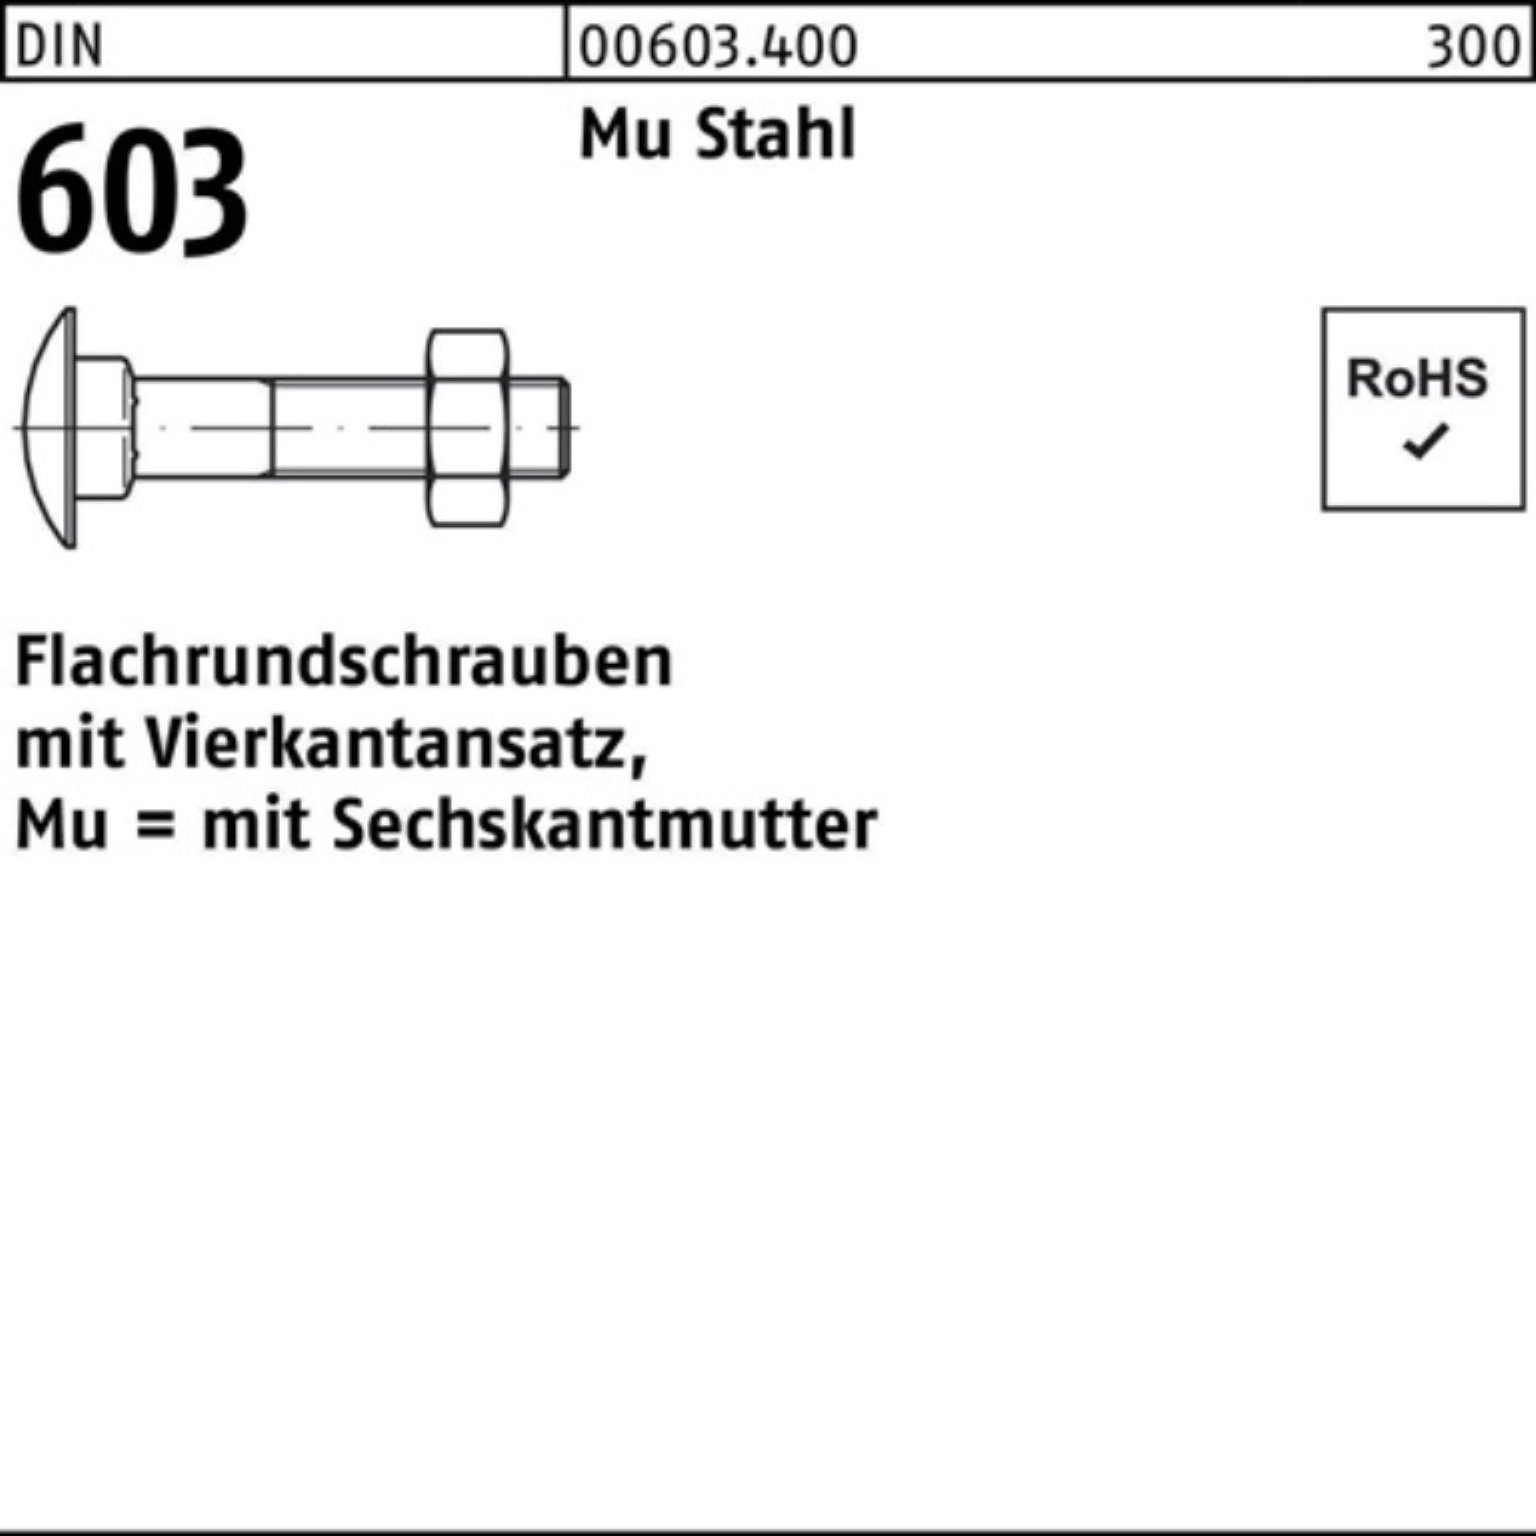 Reyher Schraube 100er Pack Vierkantansatz/6-ktmutter M12x130 603 DIN Flachrundschraube